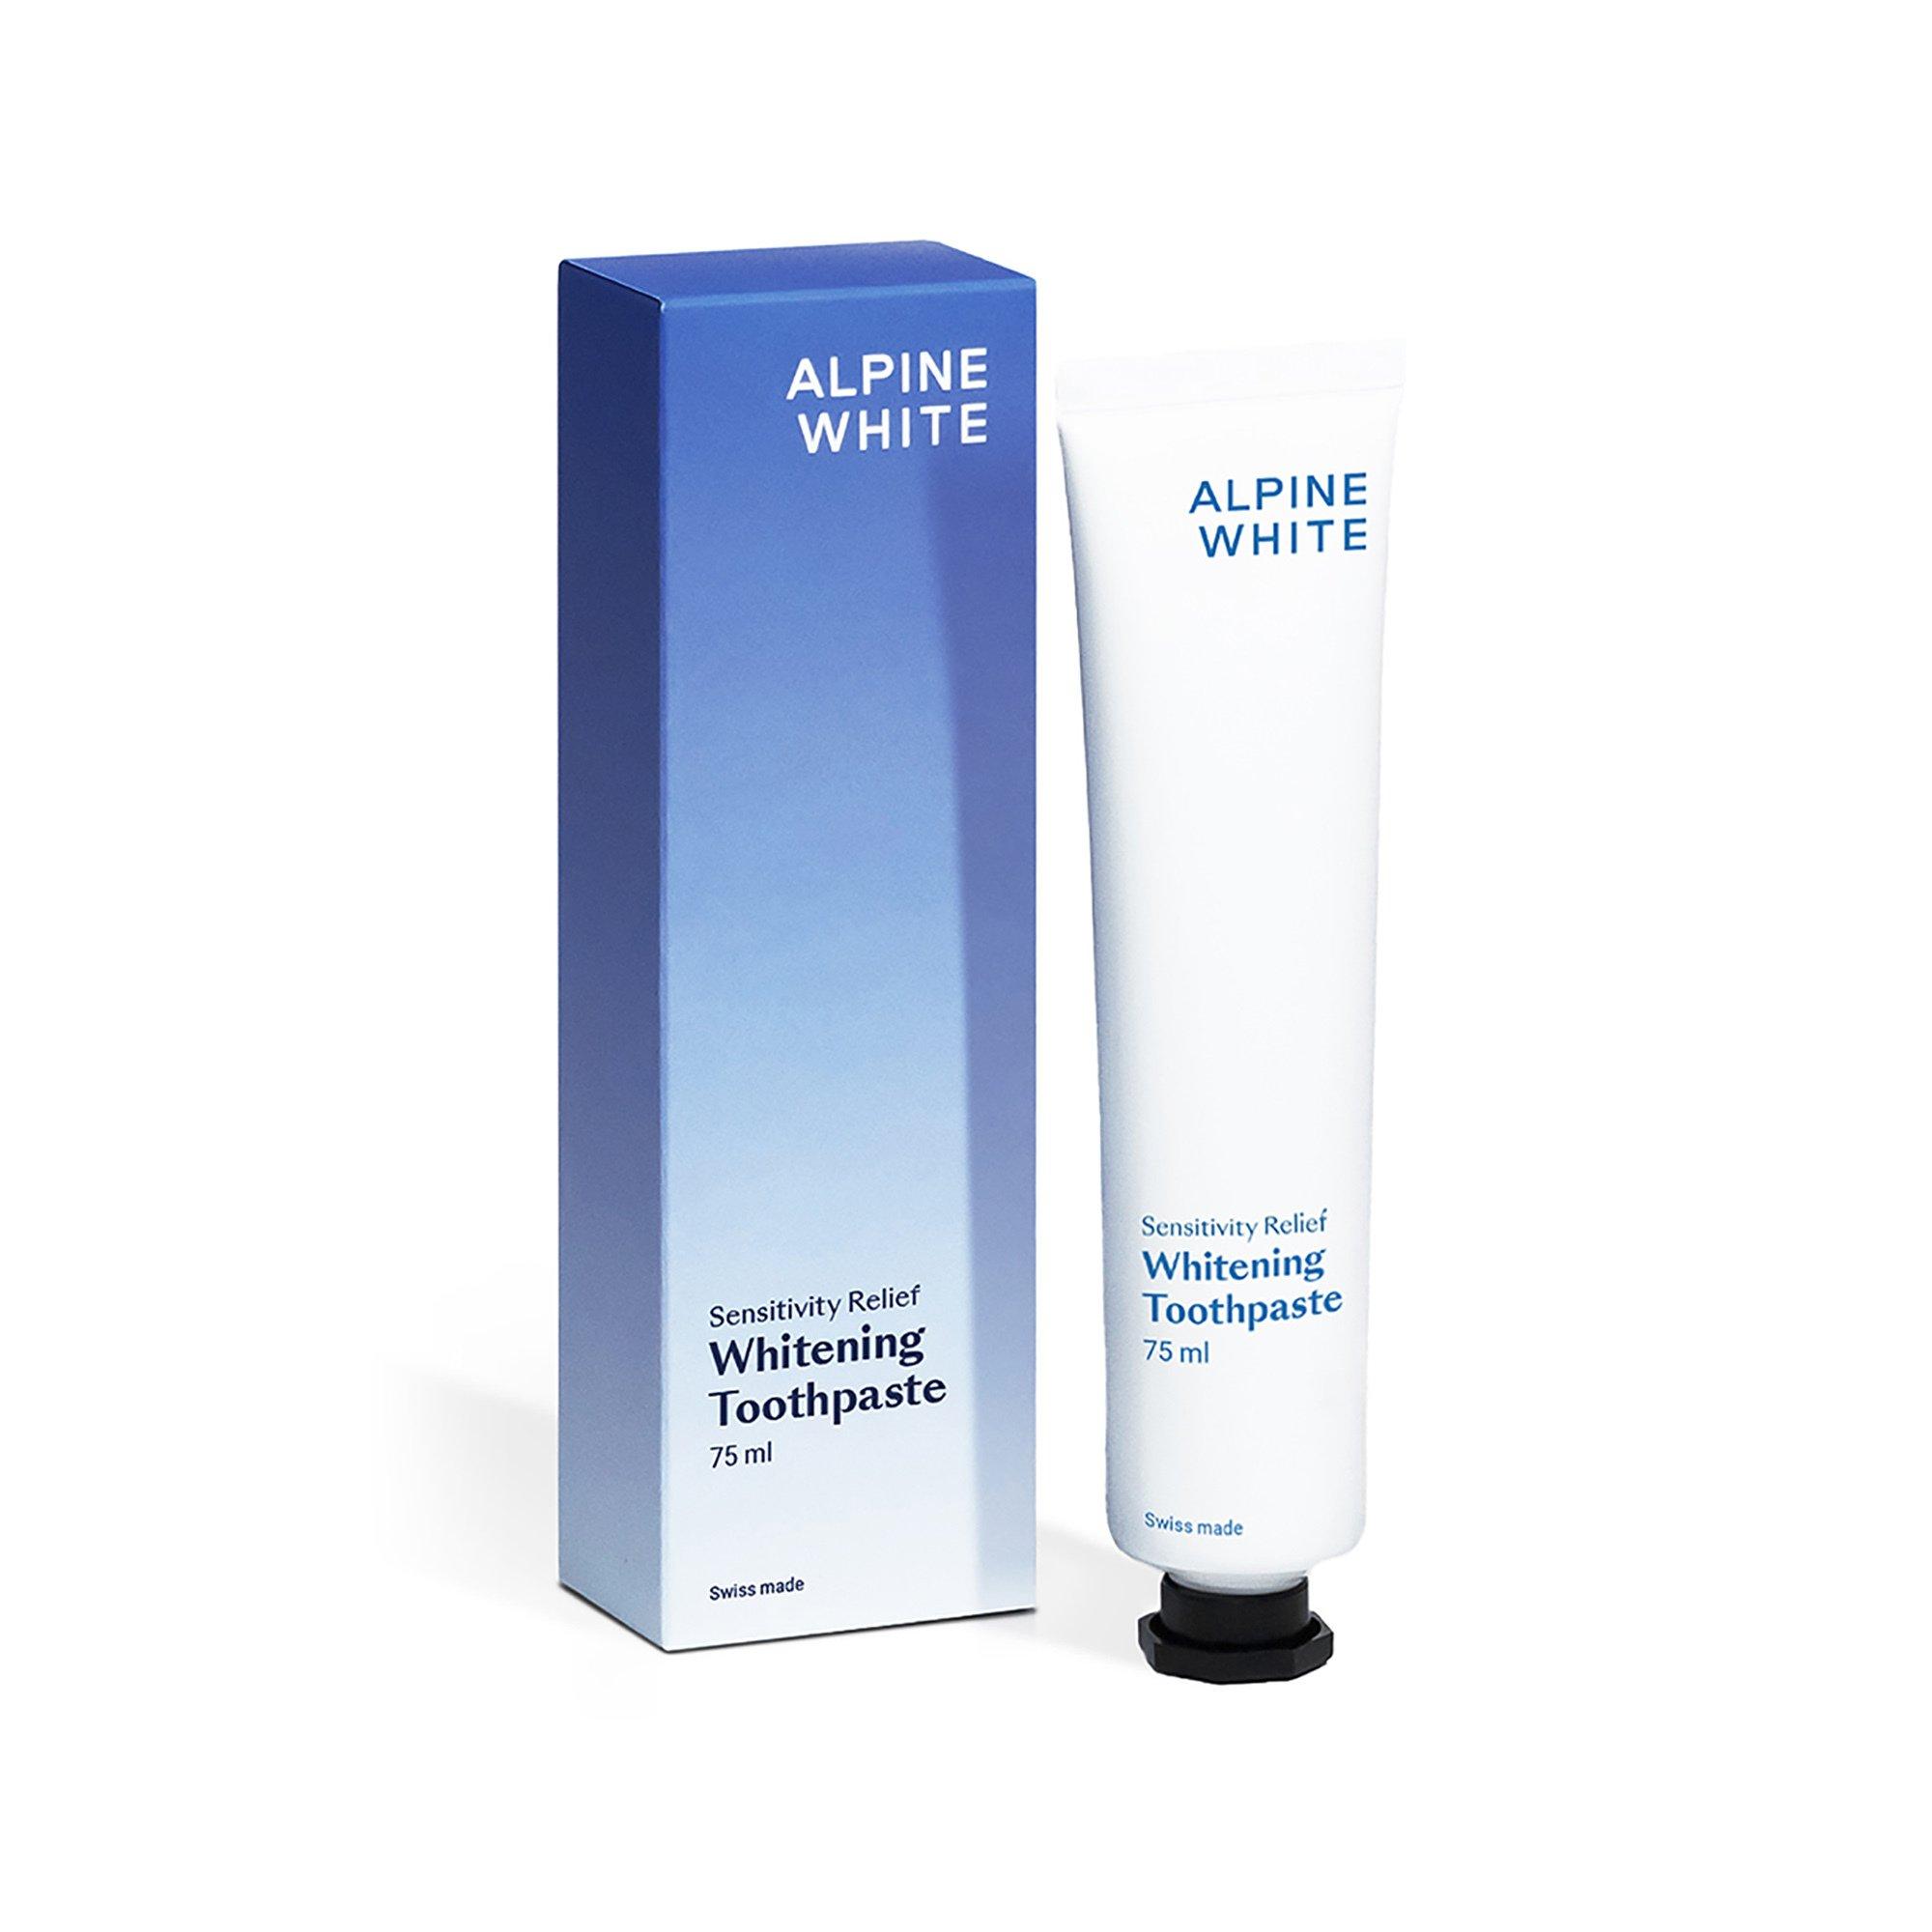 Image of ALPINE WHITE Whitening Toothpaste Sensitivity Relief - 75ml